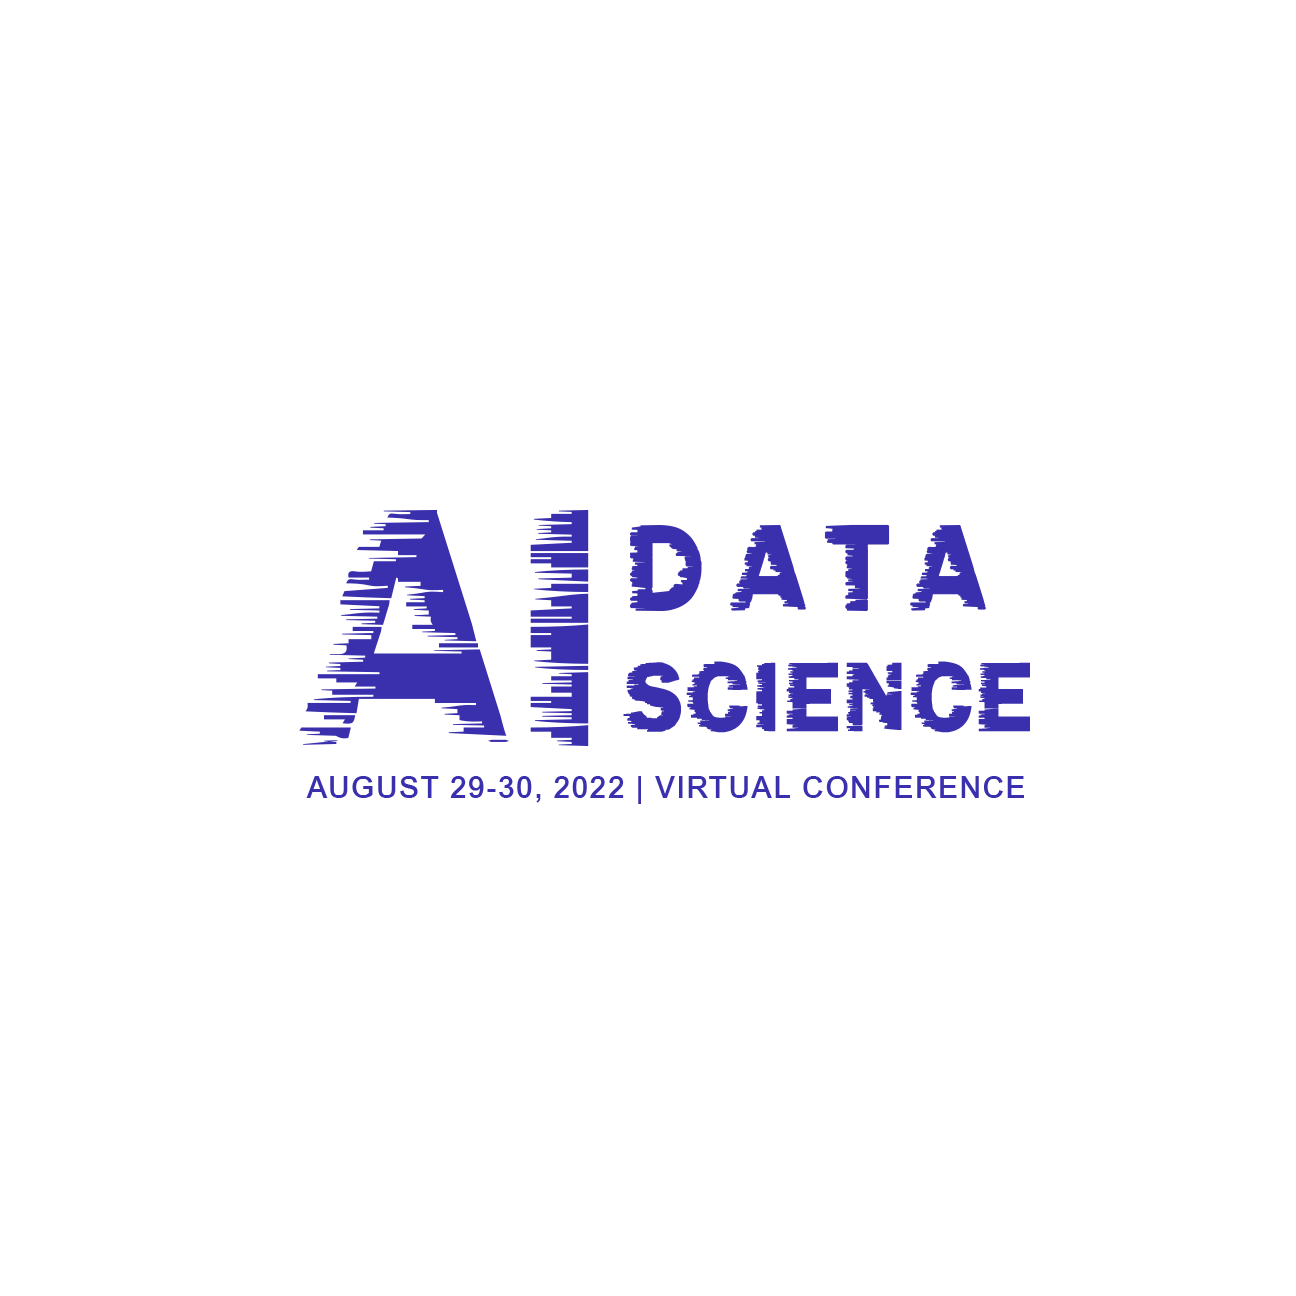 Online Tech Summit on Big Data, Data Science & Machine Learning, Hyderabad, Telangana, India